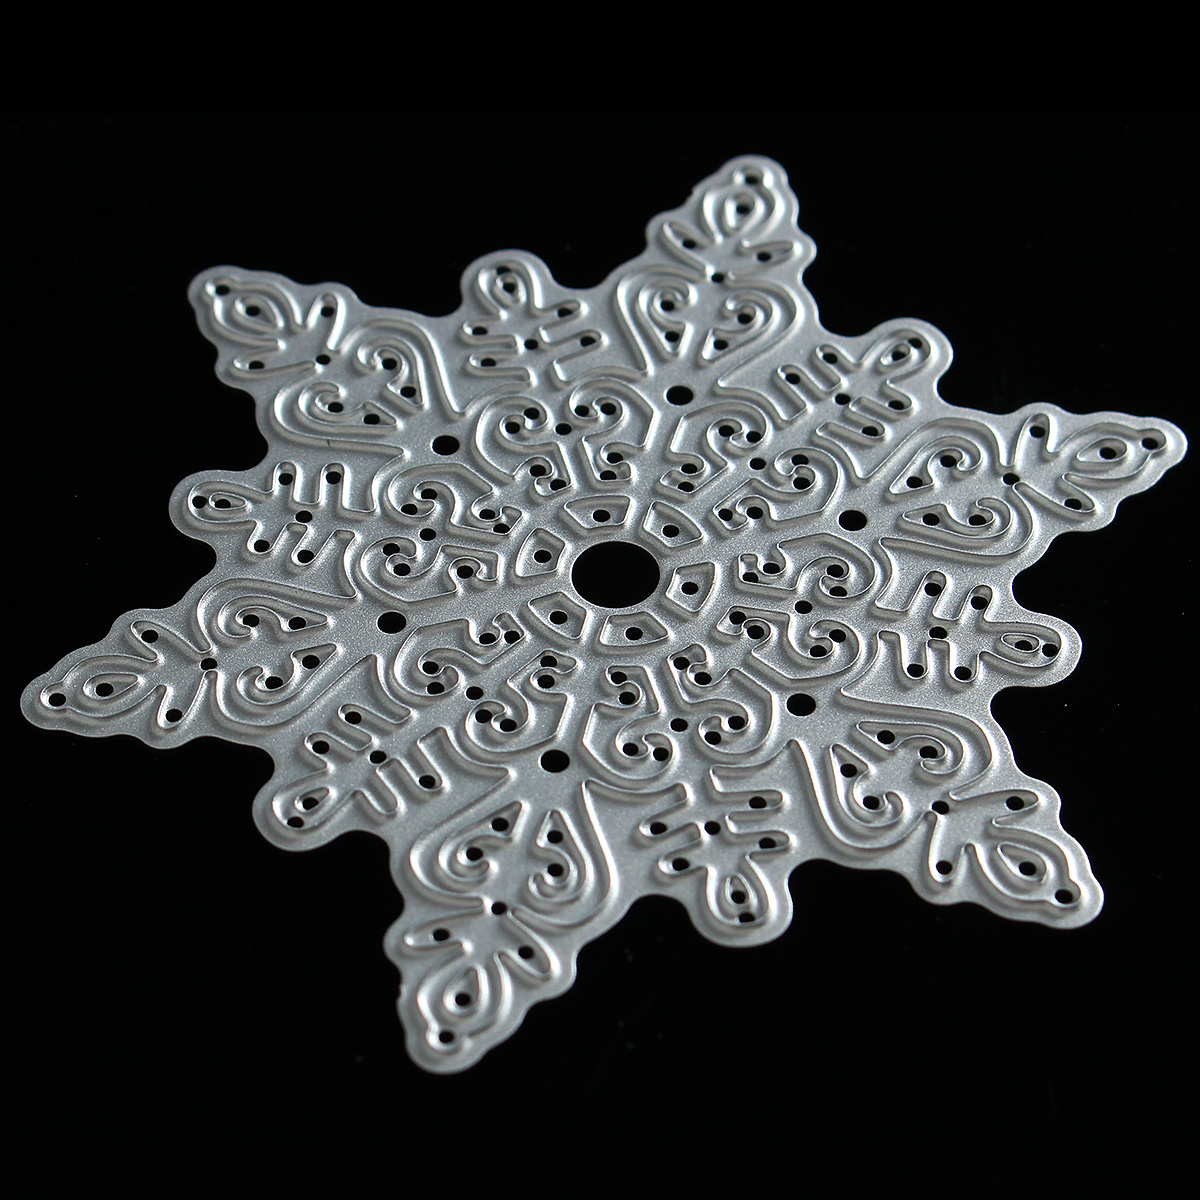 Metal-Snowflake-Christmas-Cutting-Dies-DIY-Scrapbooking-Album-Paper-Card-Decor-1104277-5